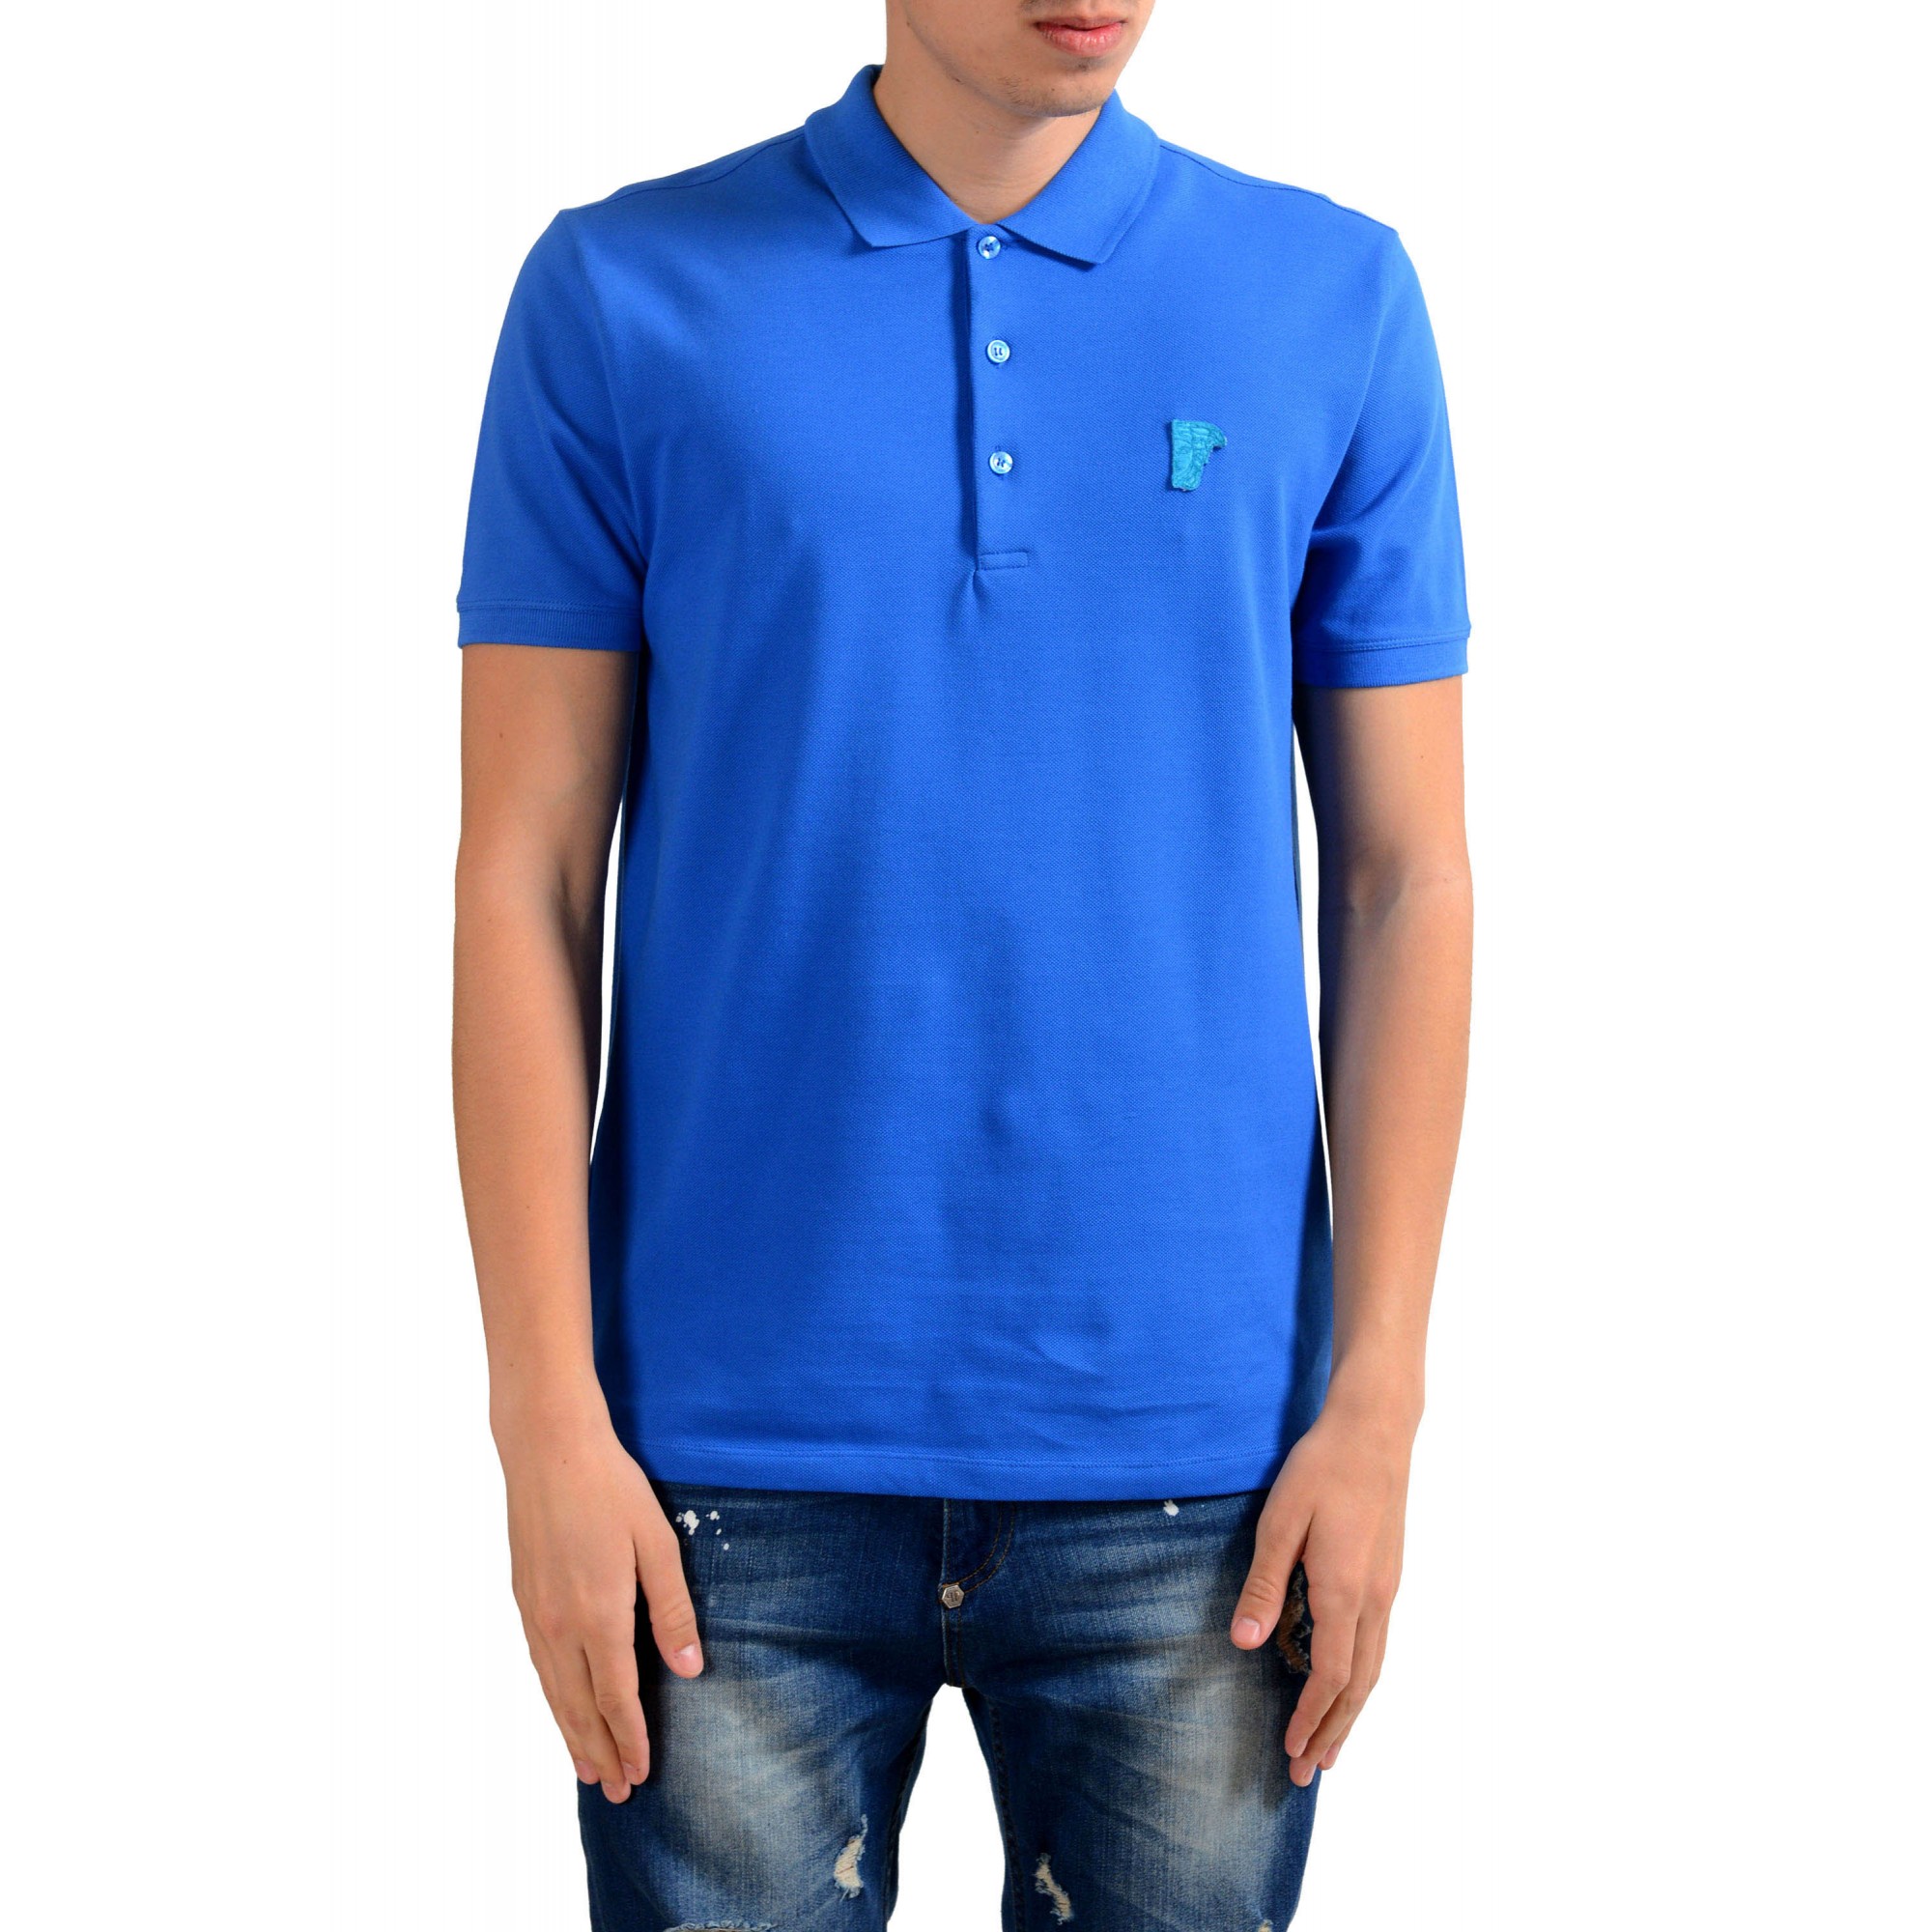 Versace Collection Men's Bright Blue Short Sleeves Polo Shirt Sz S M L XL 2XL 